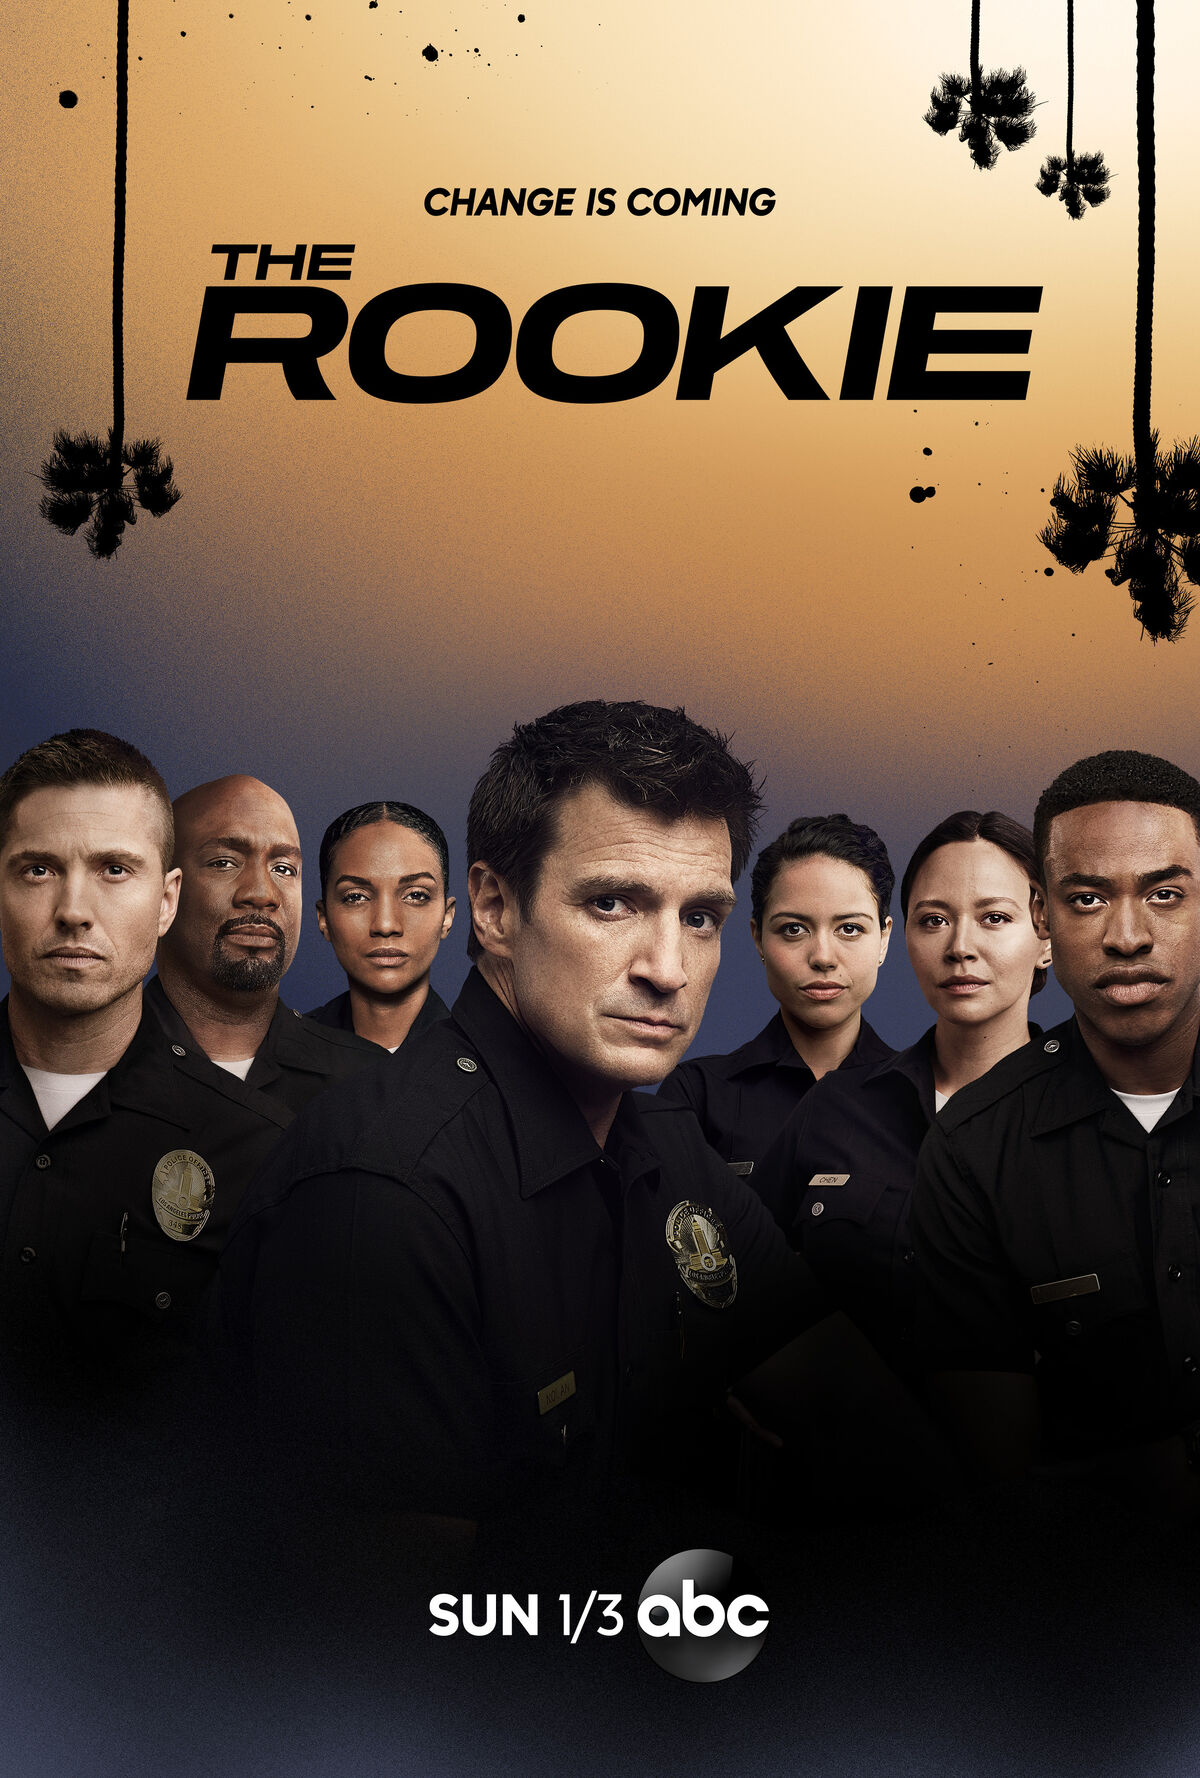 The Rookie (TV Series 2018– ) - IMDb